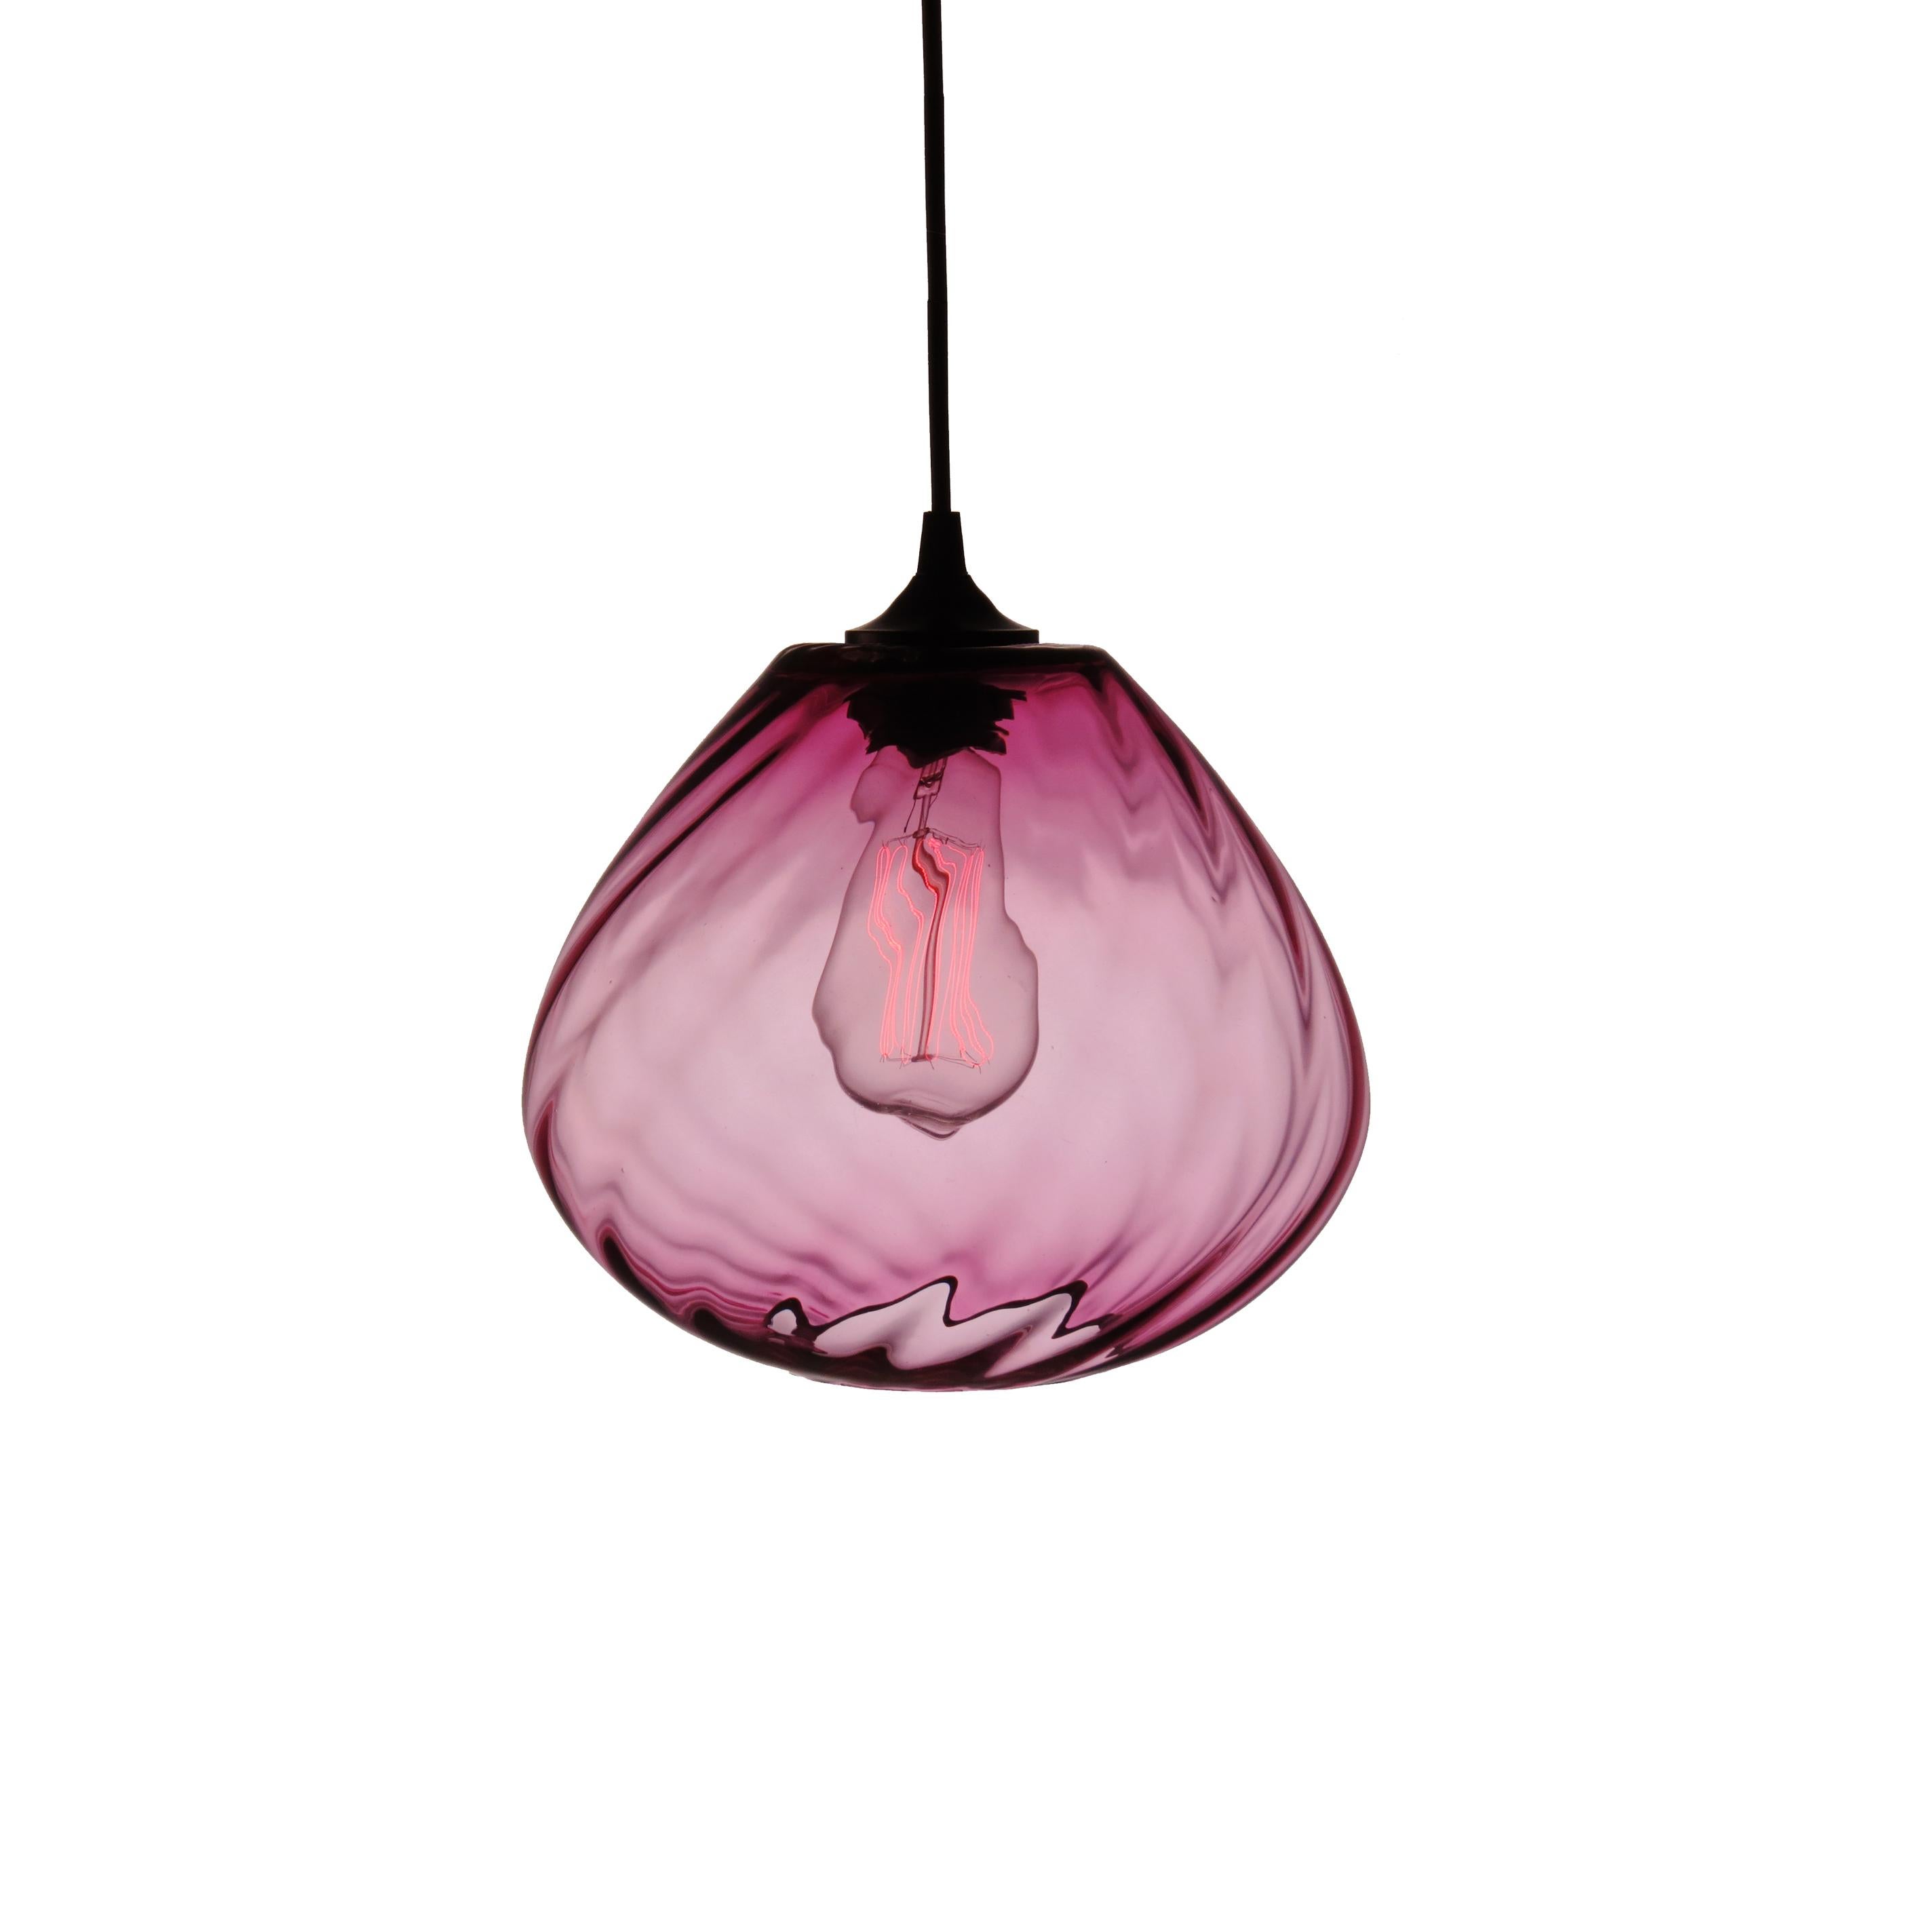 Royal Purple Transparent Hand Blown Glass Architectural Pendant Lamp For Sale 1